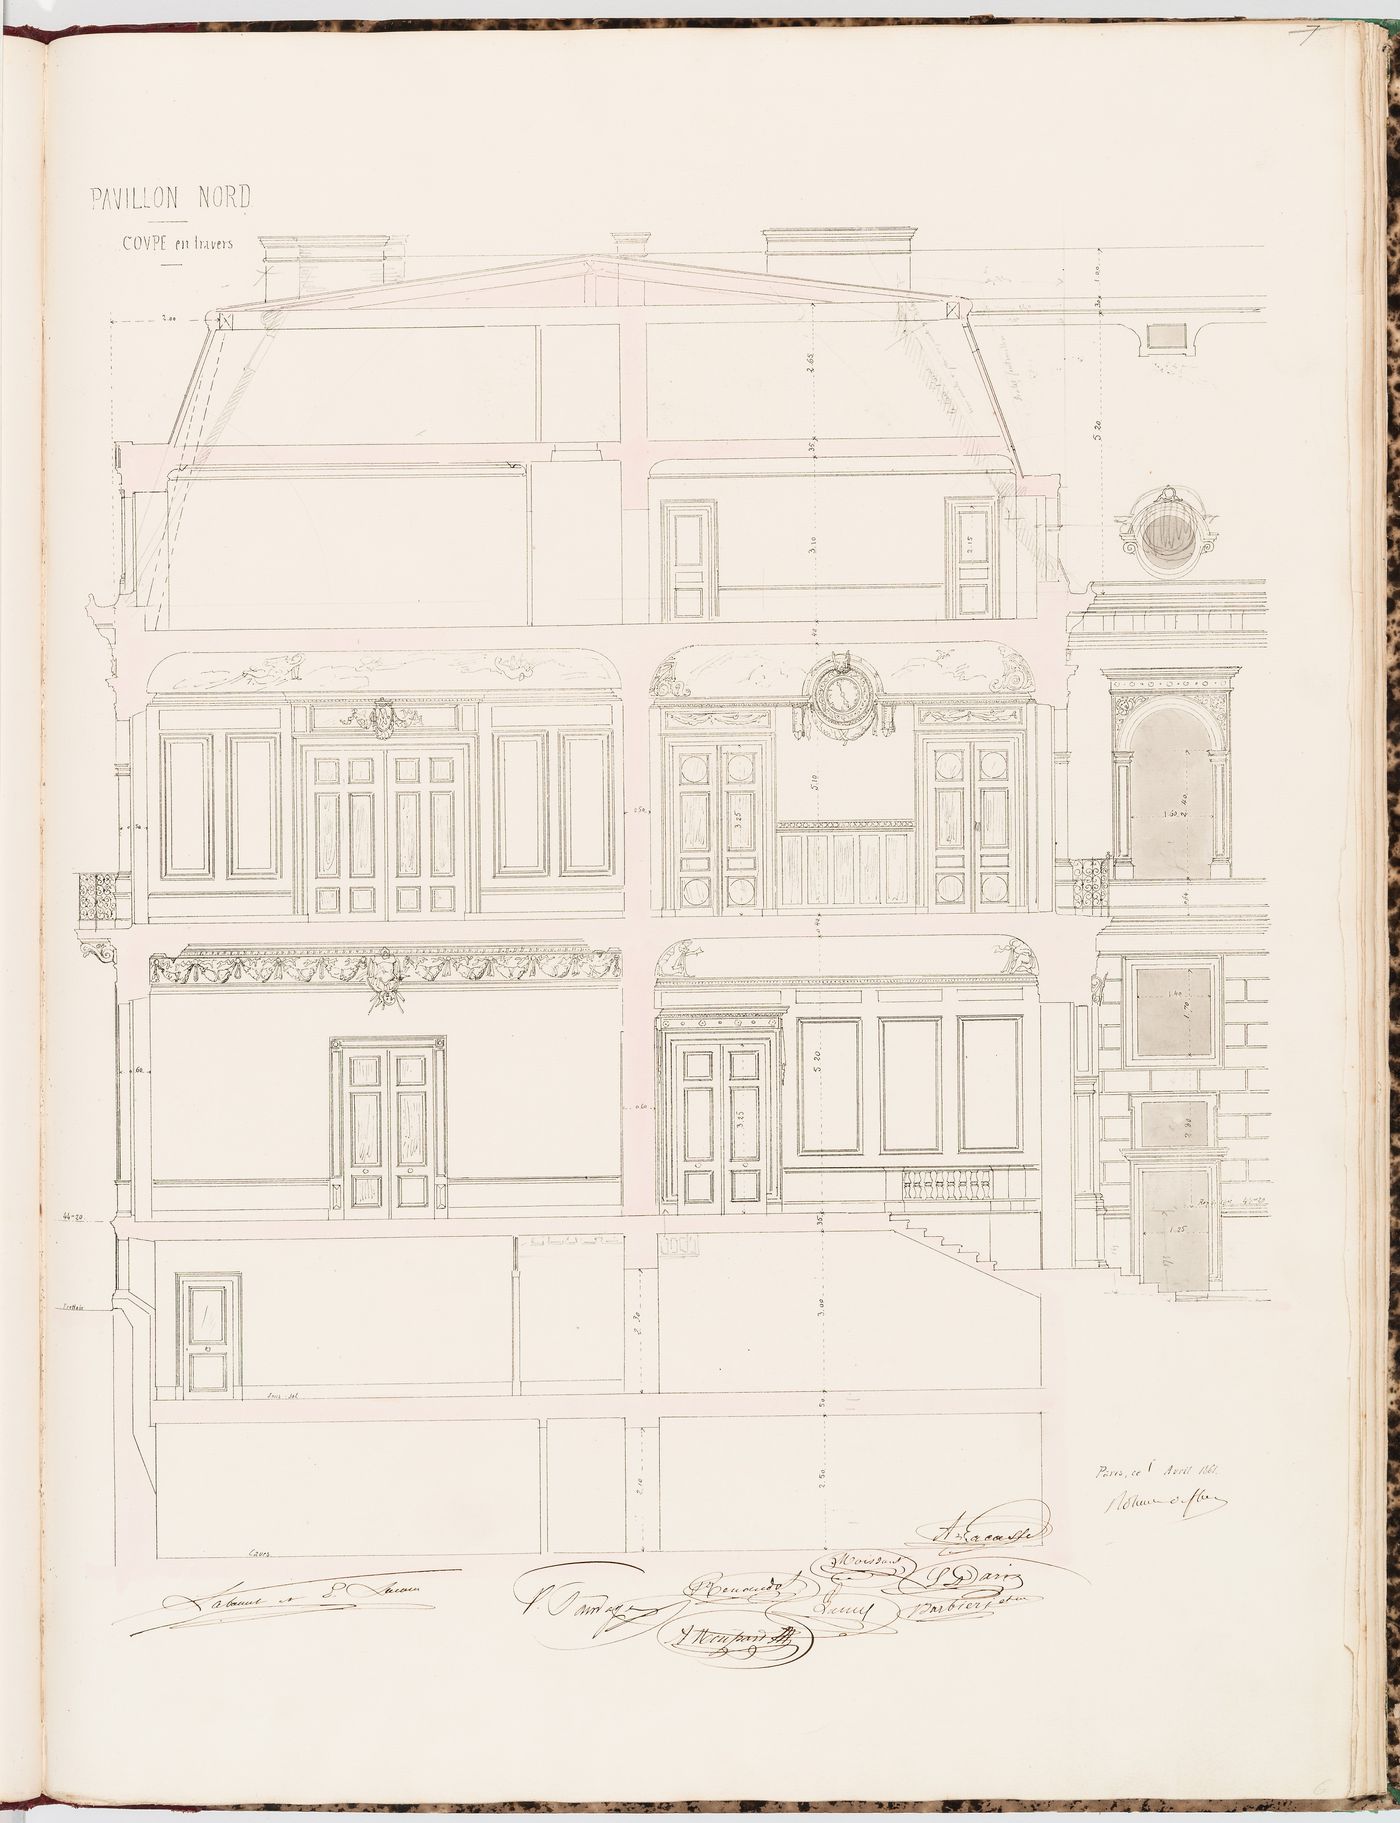 Cross section through the "pavillon nord", including a partial elevation for the entrance façade, Hôtel Sauvage, Paris